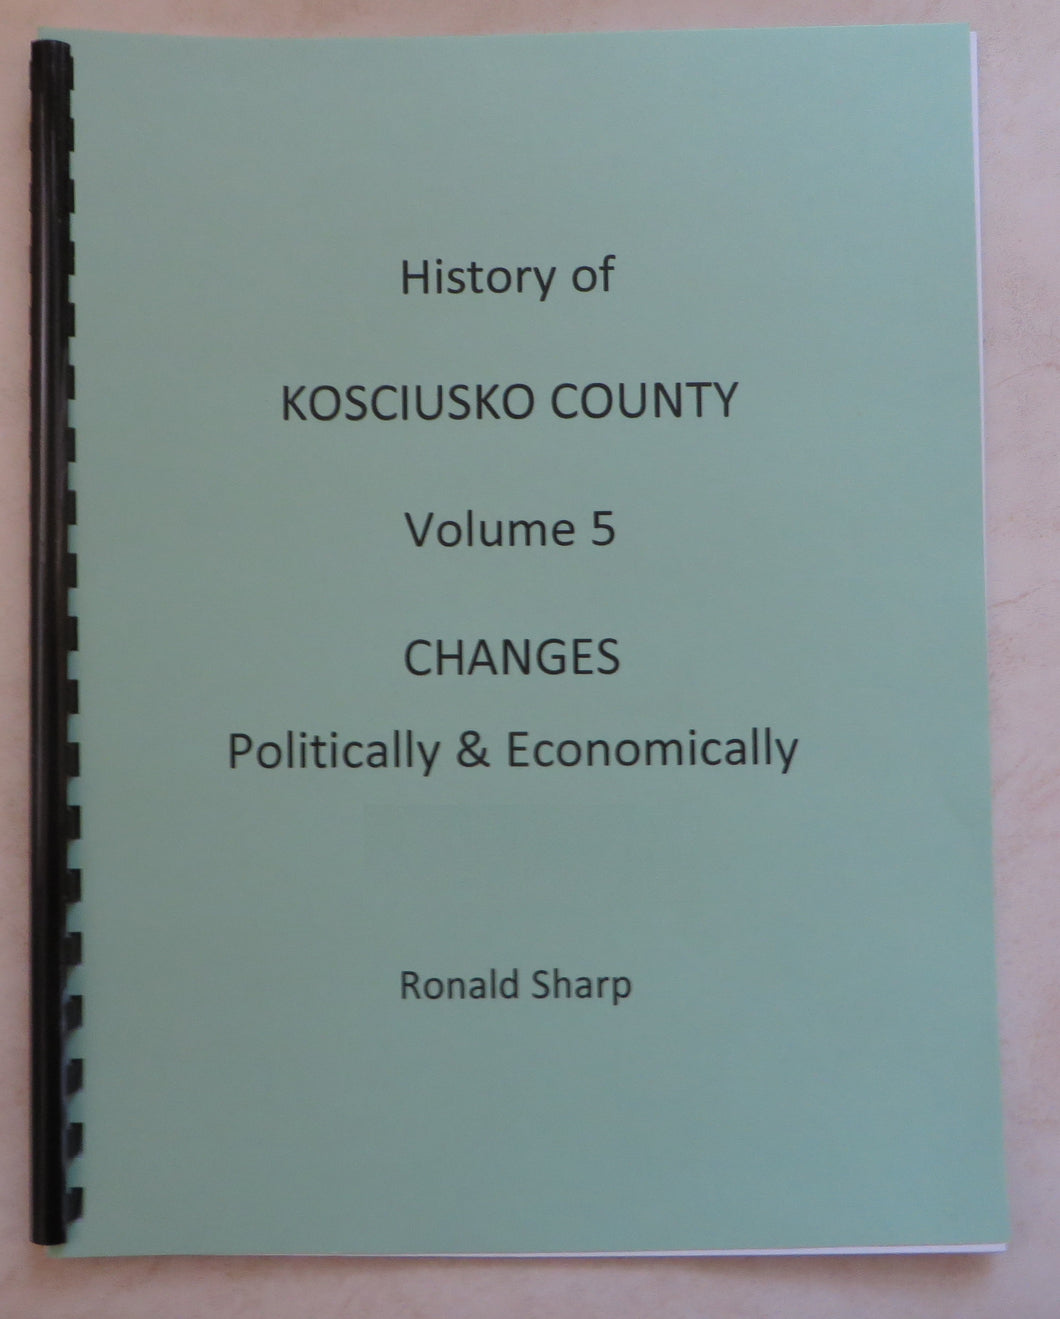 History of Kosciusko County, Volume 5, Changes-Politically & Economically, 1900-1915